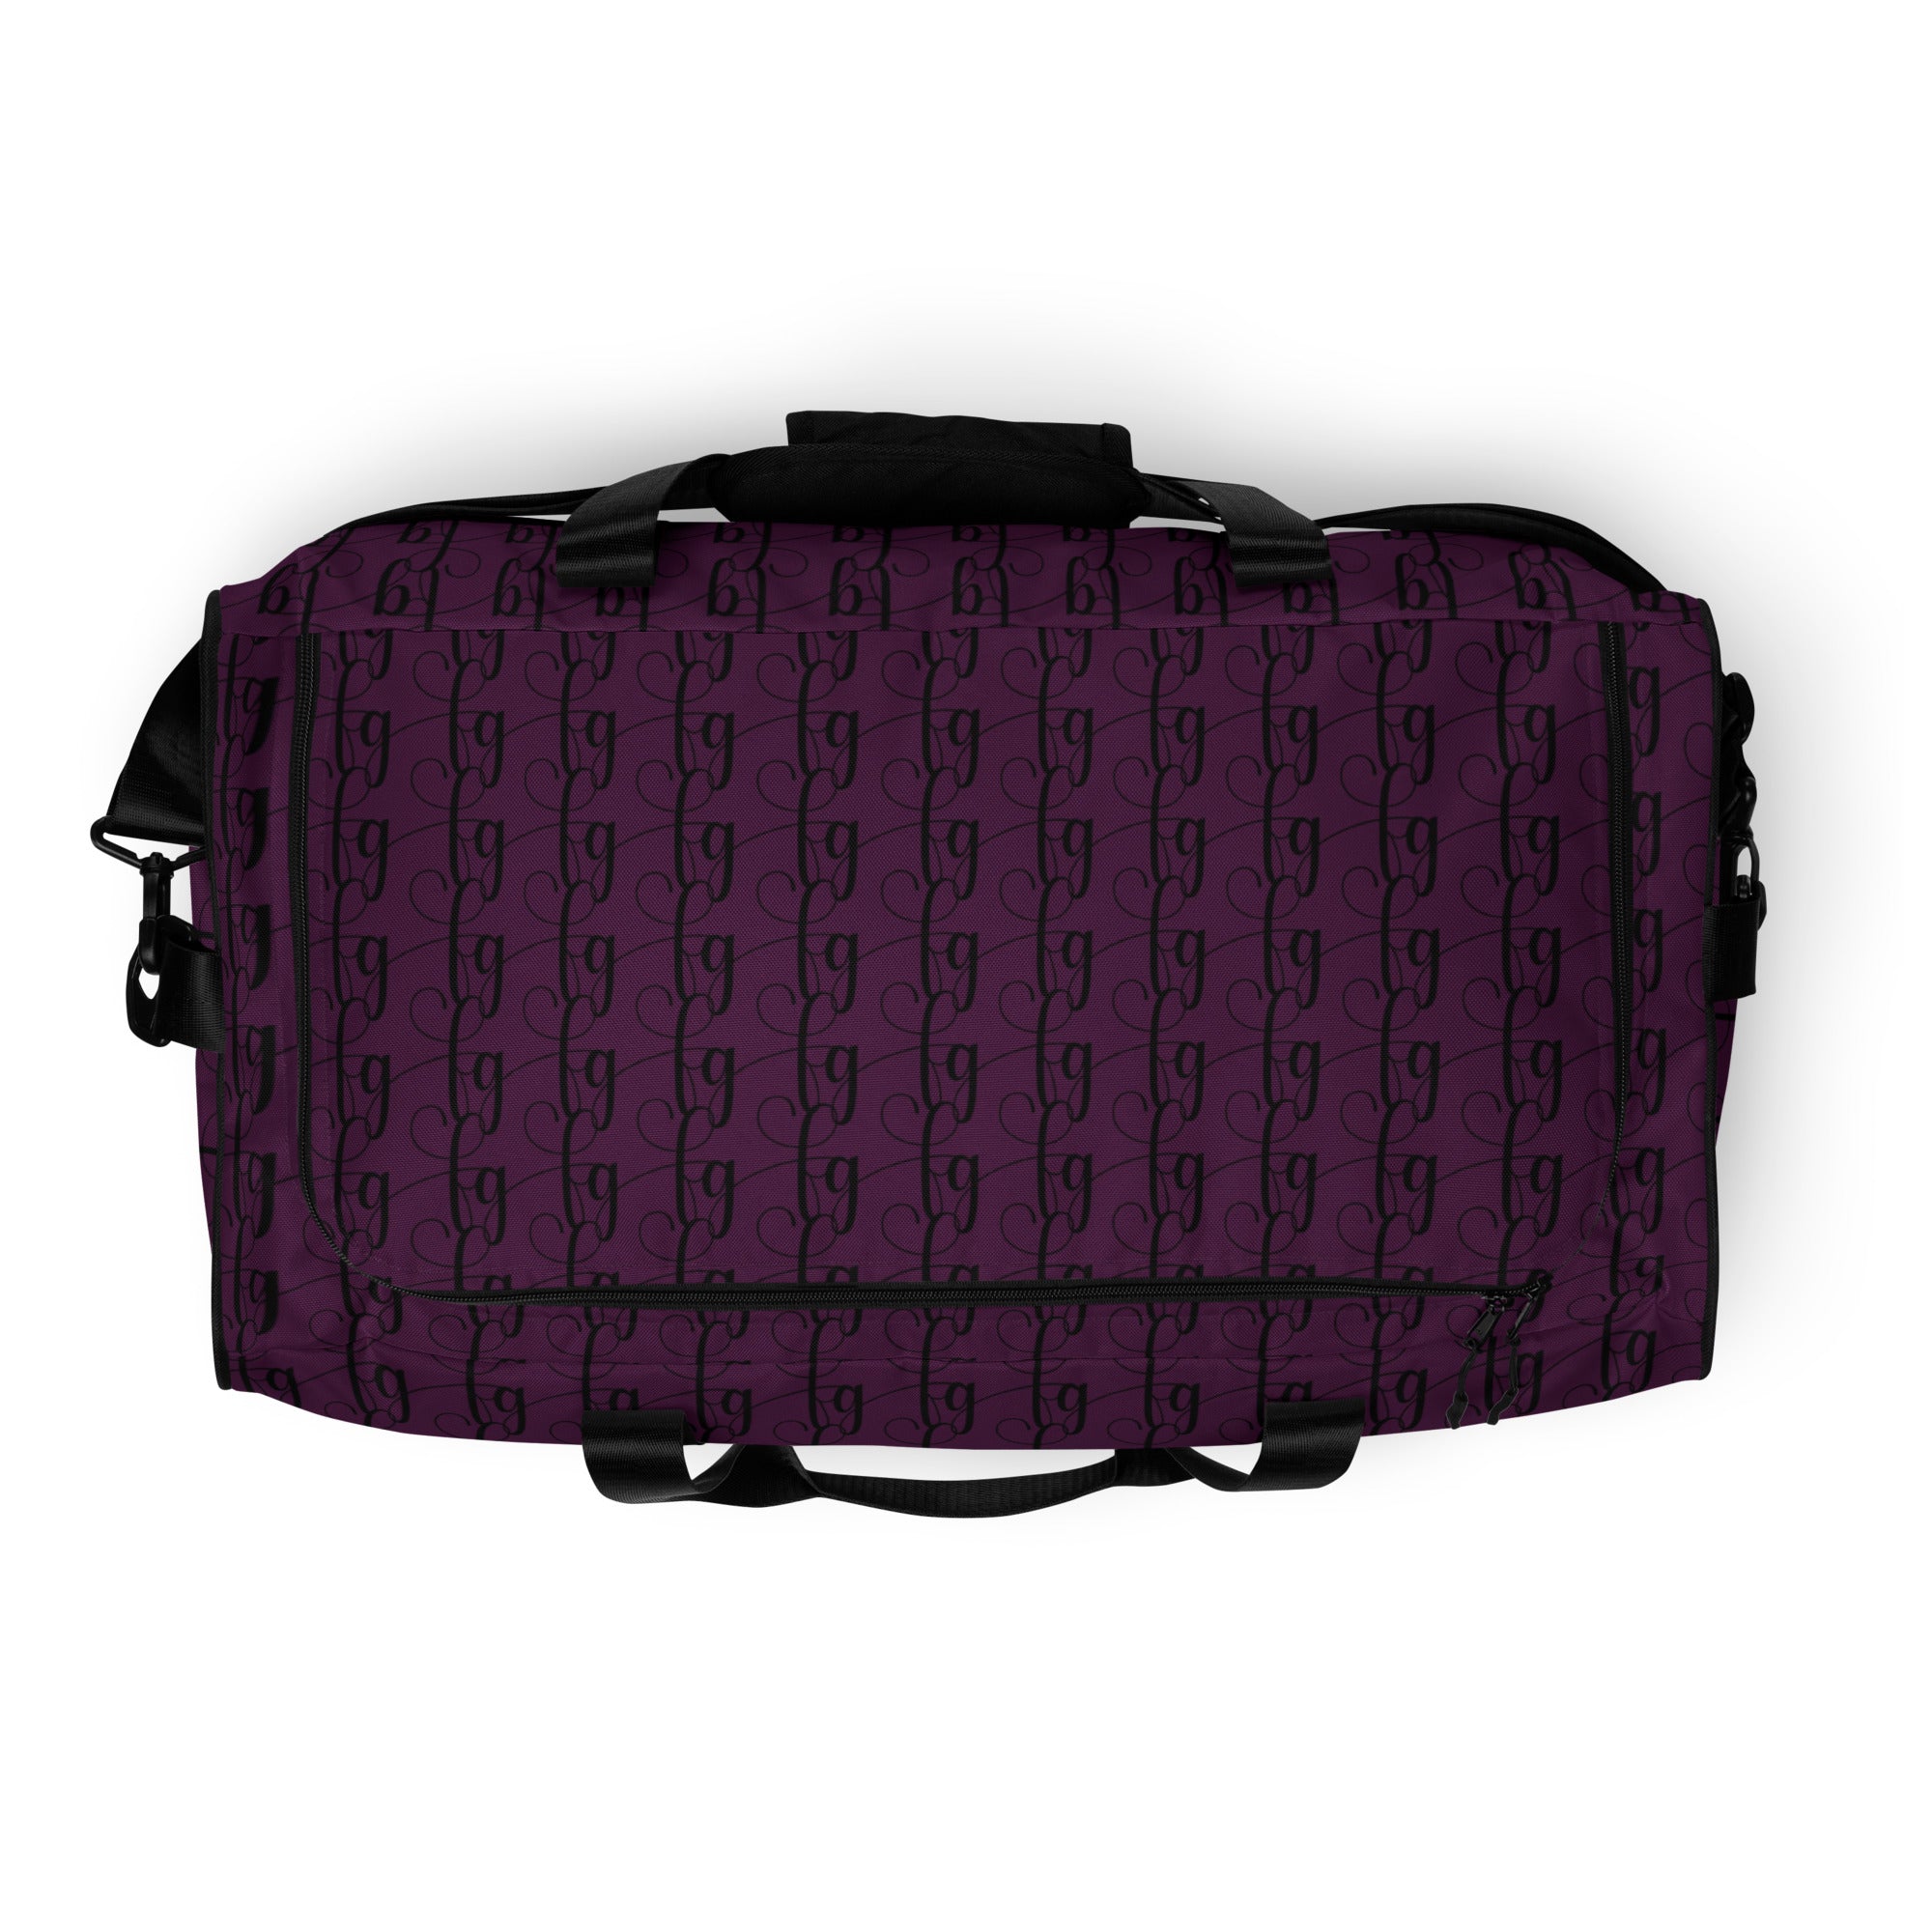 Tyrian Purple / Black FG Blocked Duffle bag - FleekGoddess